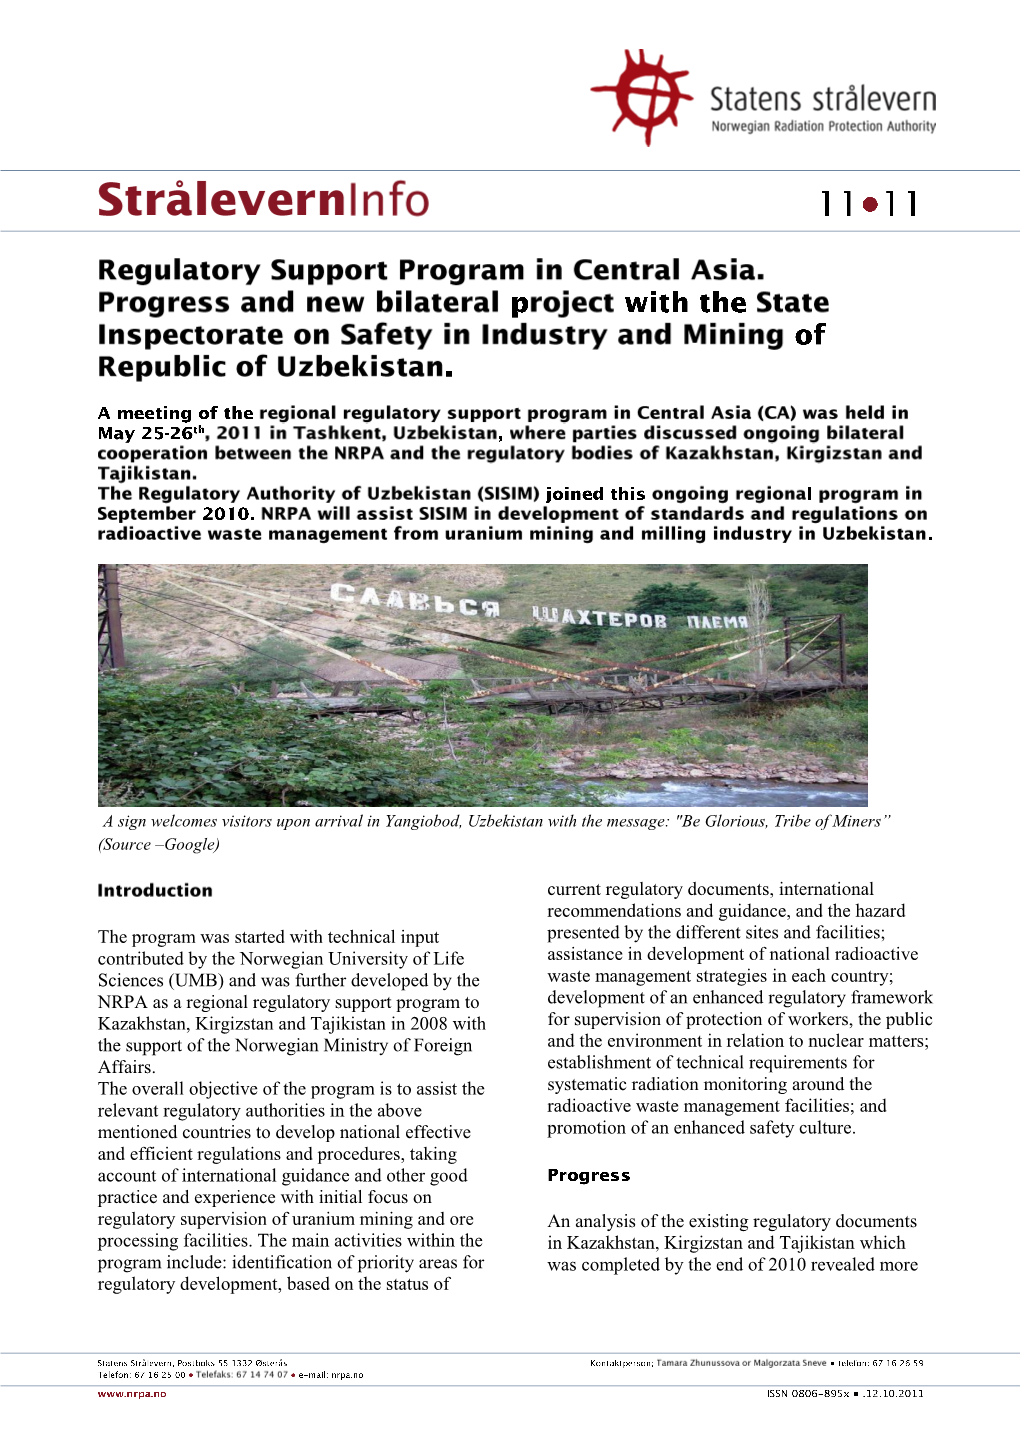 Stråleverninfo 11:2011 Regulatory Support Program in Central Asia